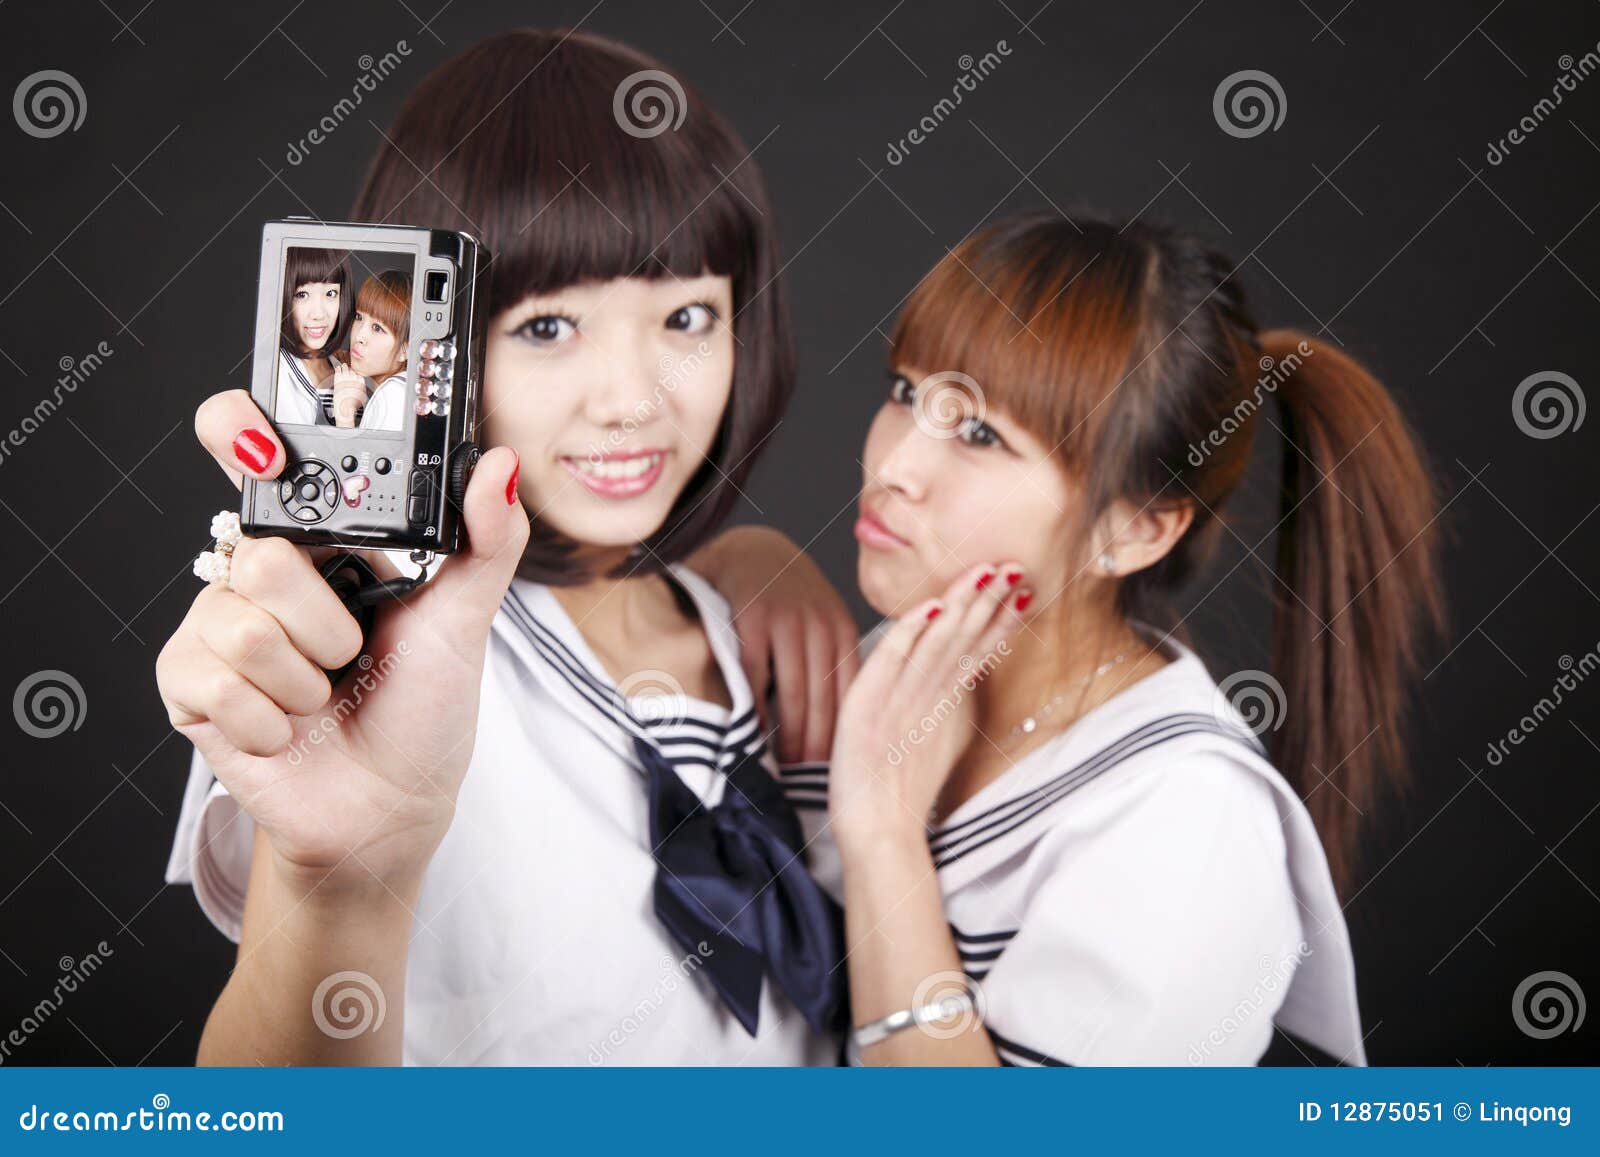 schoolgirls taking self-portrait